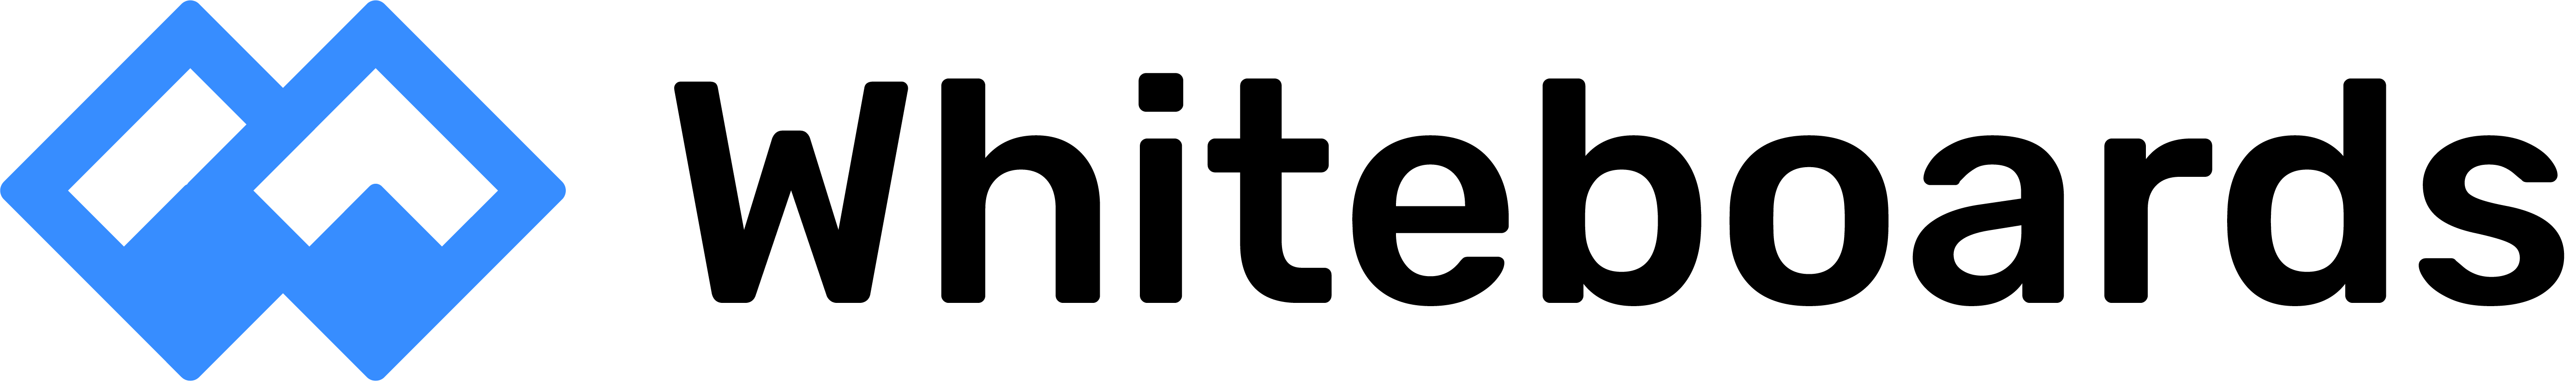 Whiteboards logo